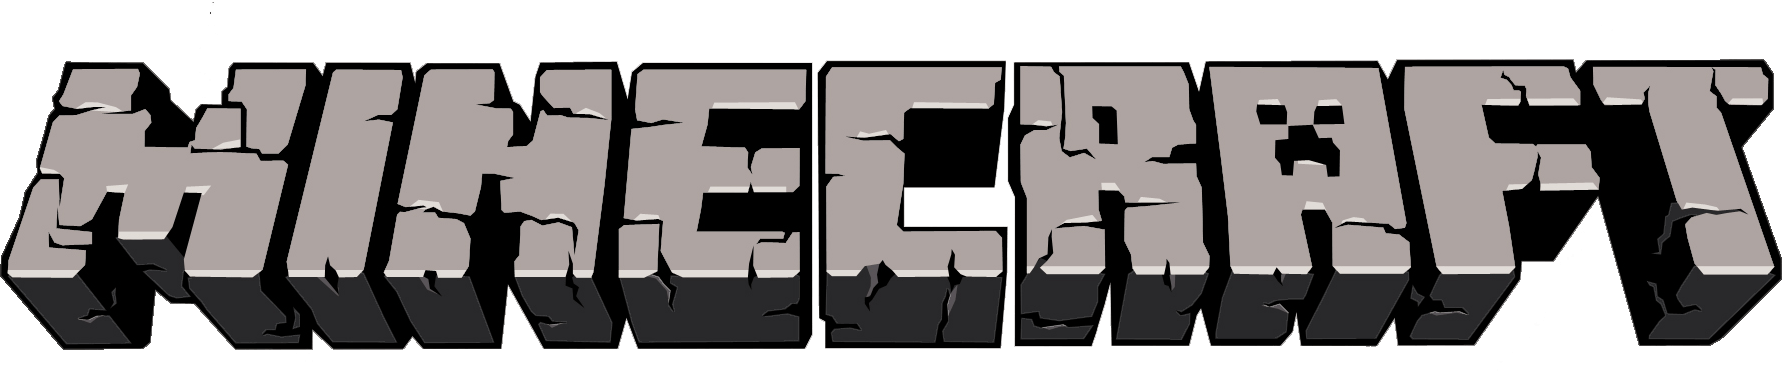 image-logo-minecraft